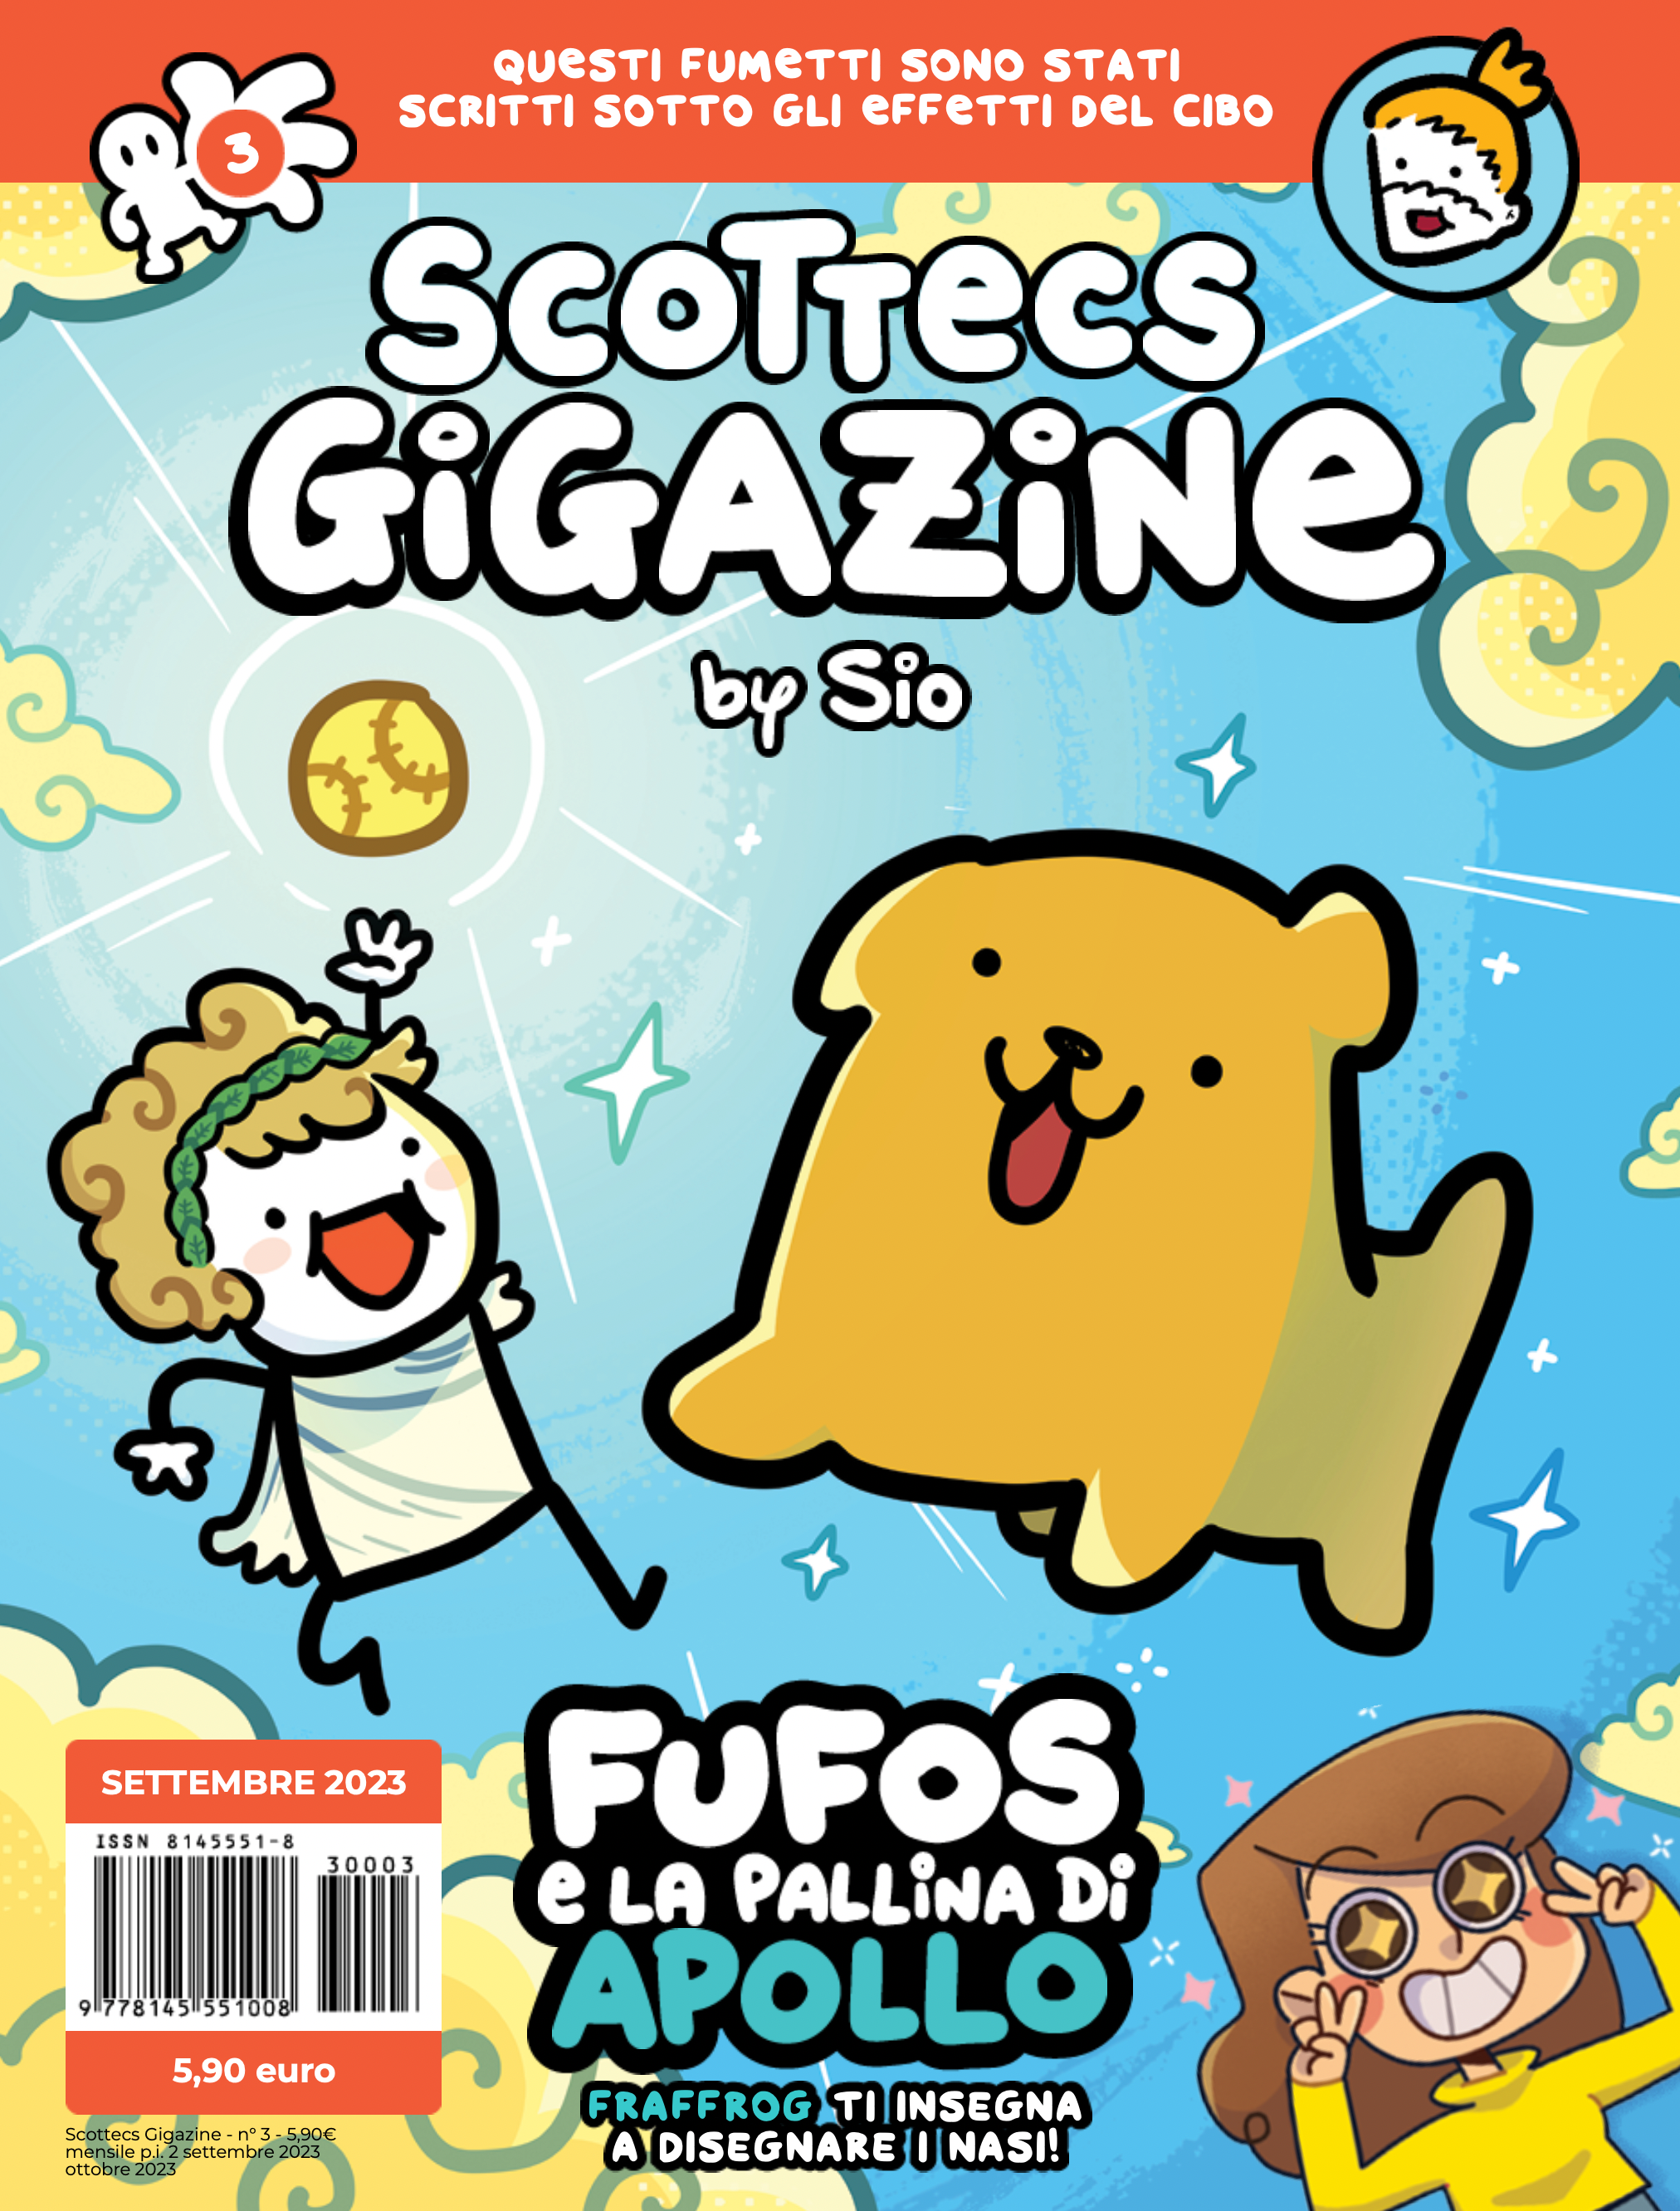 Scottecs Megazine 5 - ebook - Shockdom - Comics Fu fumetti digitali